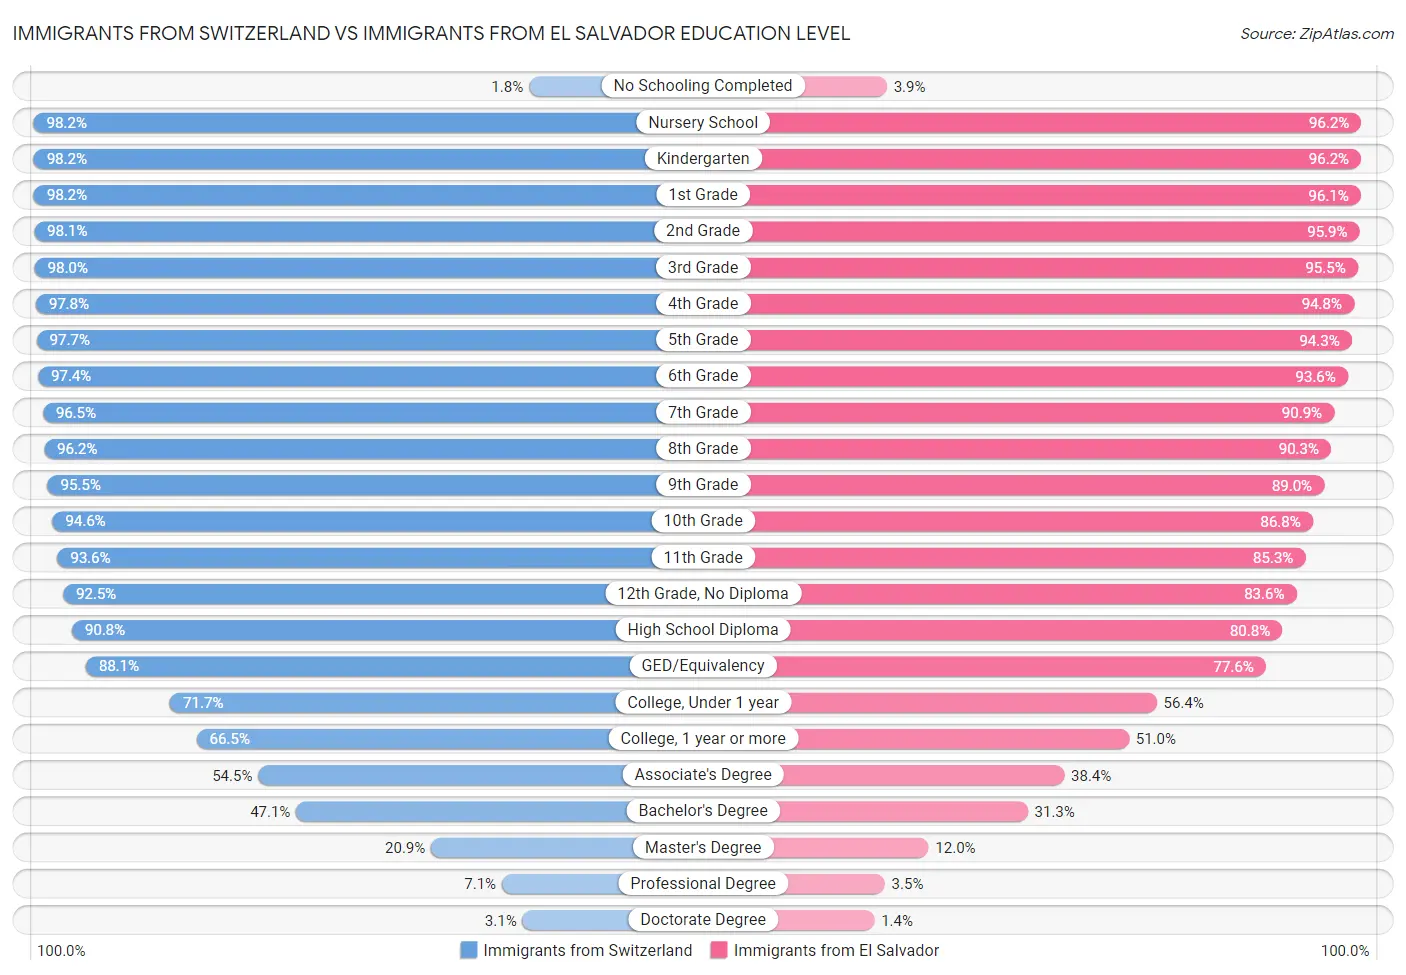 Immigrants from Switzerland vs Immigrants from El Salvador Education Level